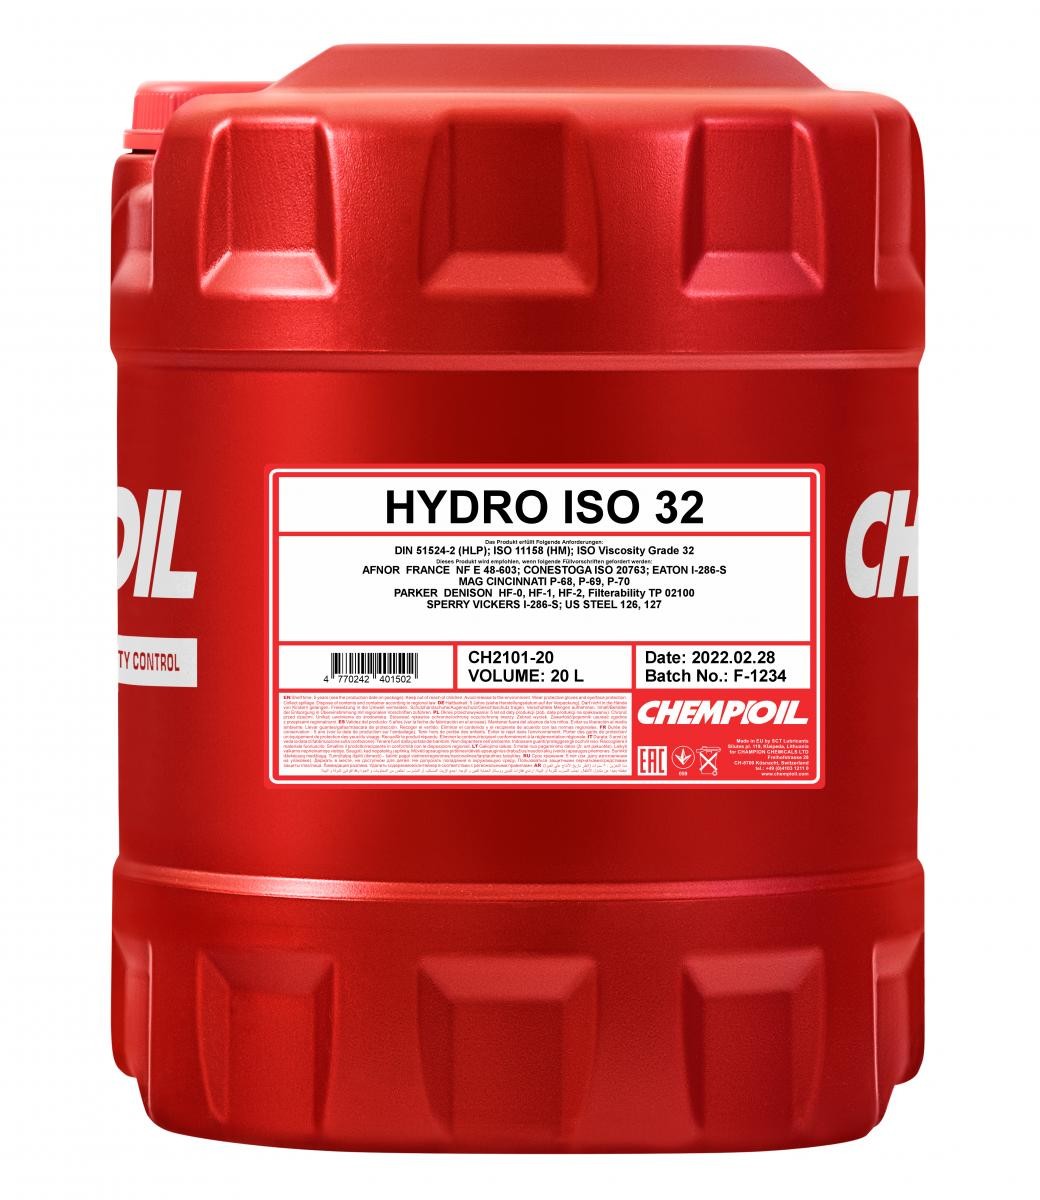 CHEMPIOIL Hydro, ISO 32 Inhalt: 20l ISO 11158 HM, DIN 51524-2 HLP, Afnor NF E 48 Hydrauliköl CH2101-20 kaufen